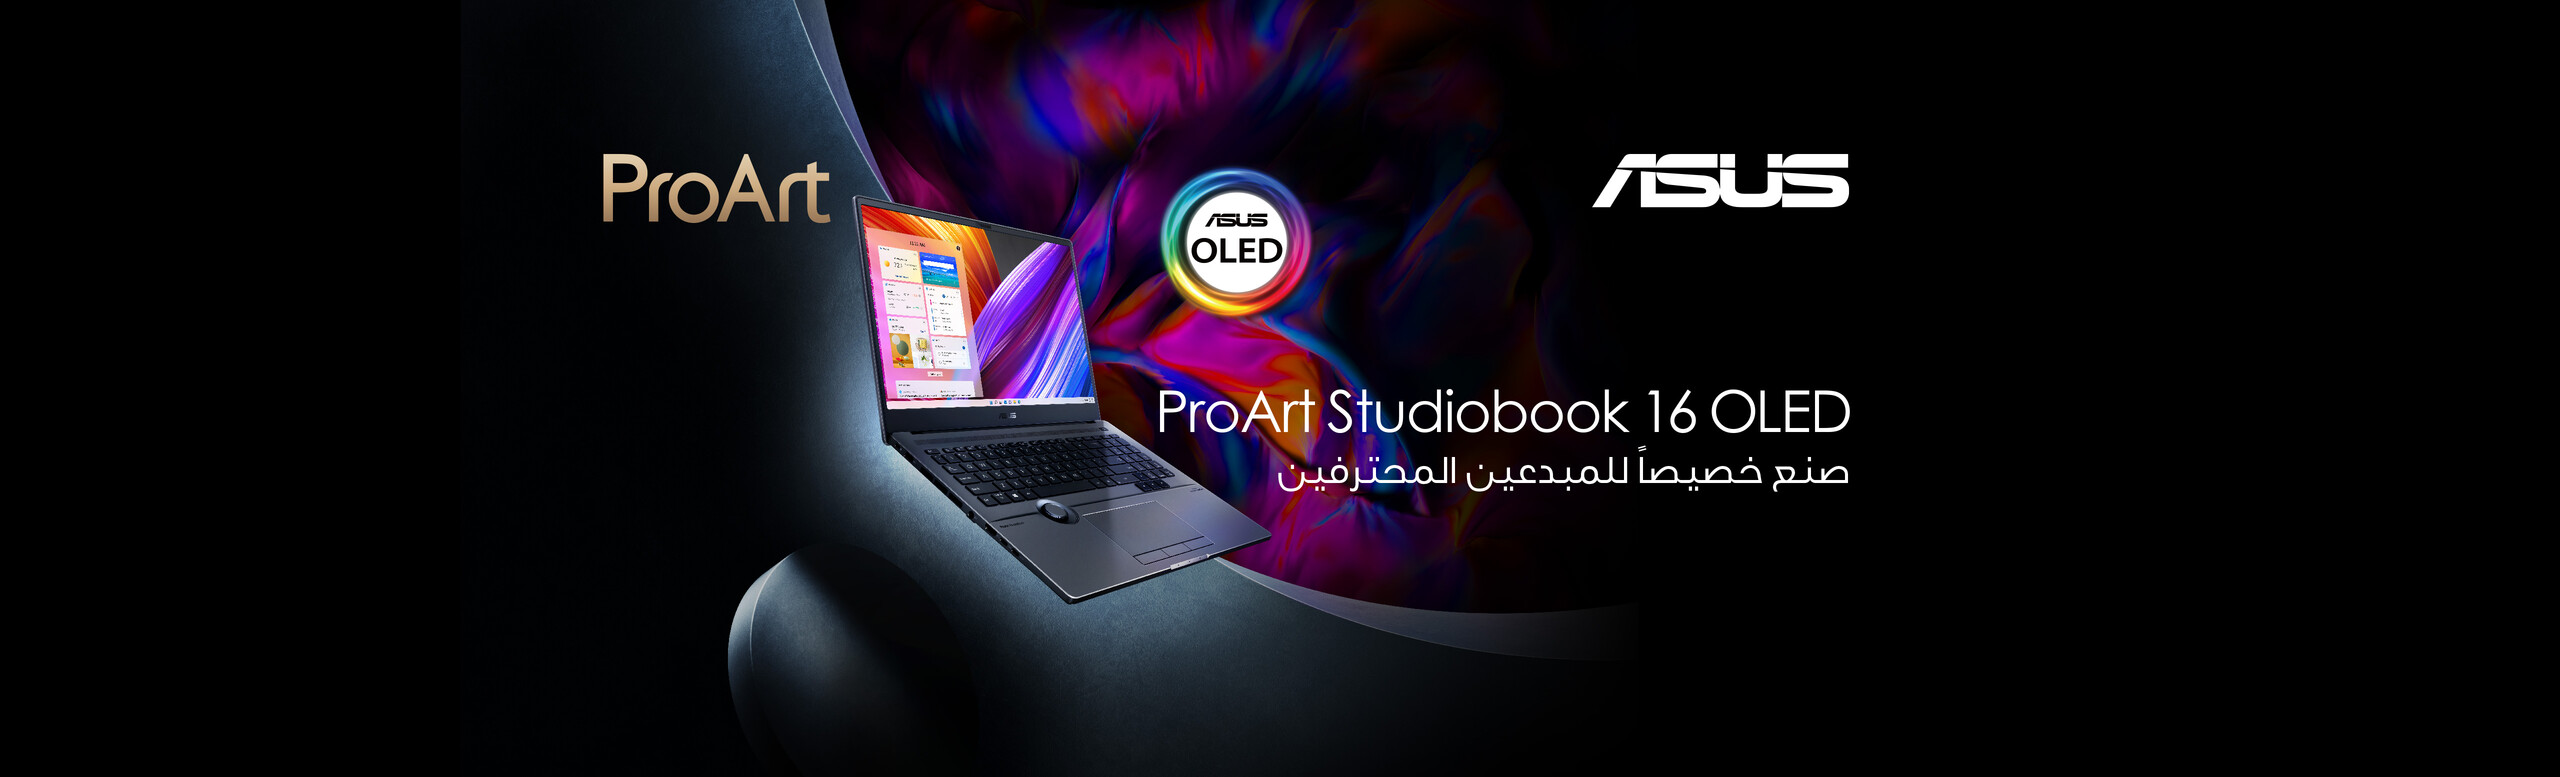 ProArt Studiobook 16 OLED (H5600, AMD Ryzen 5000 series)